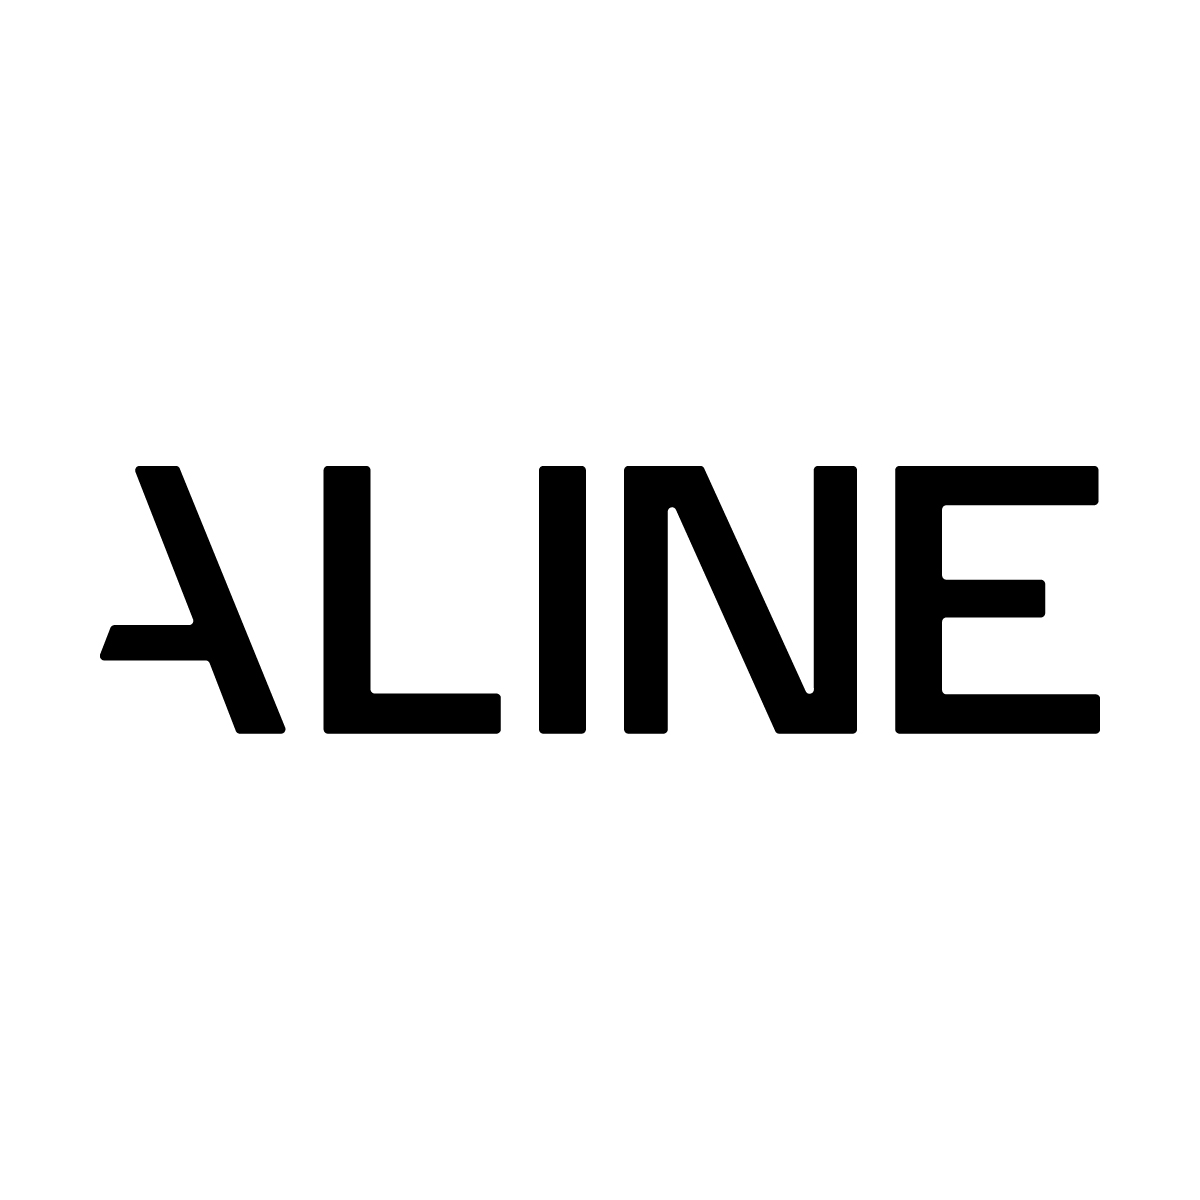 aline logo